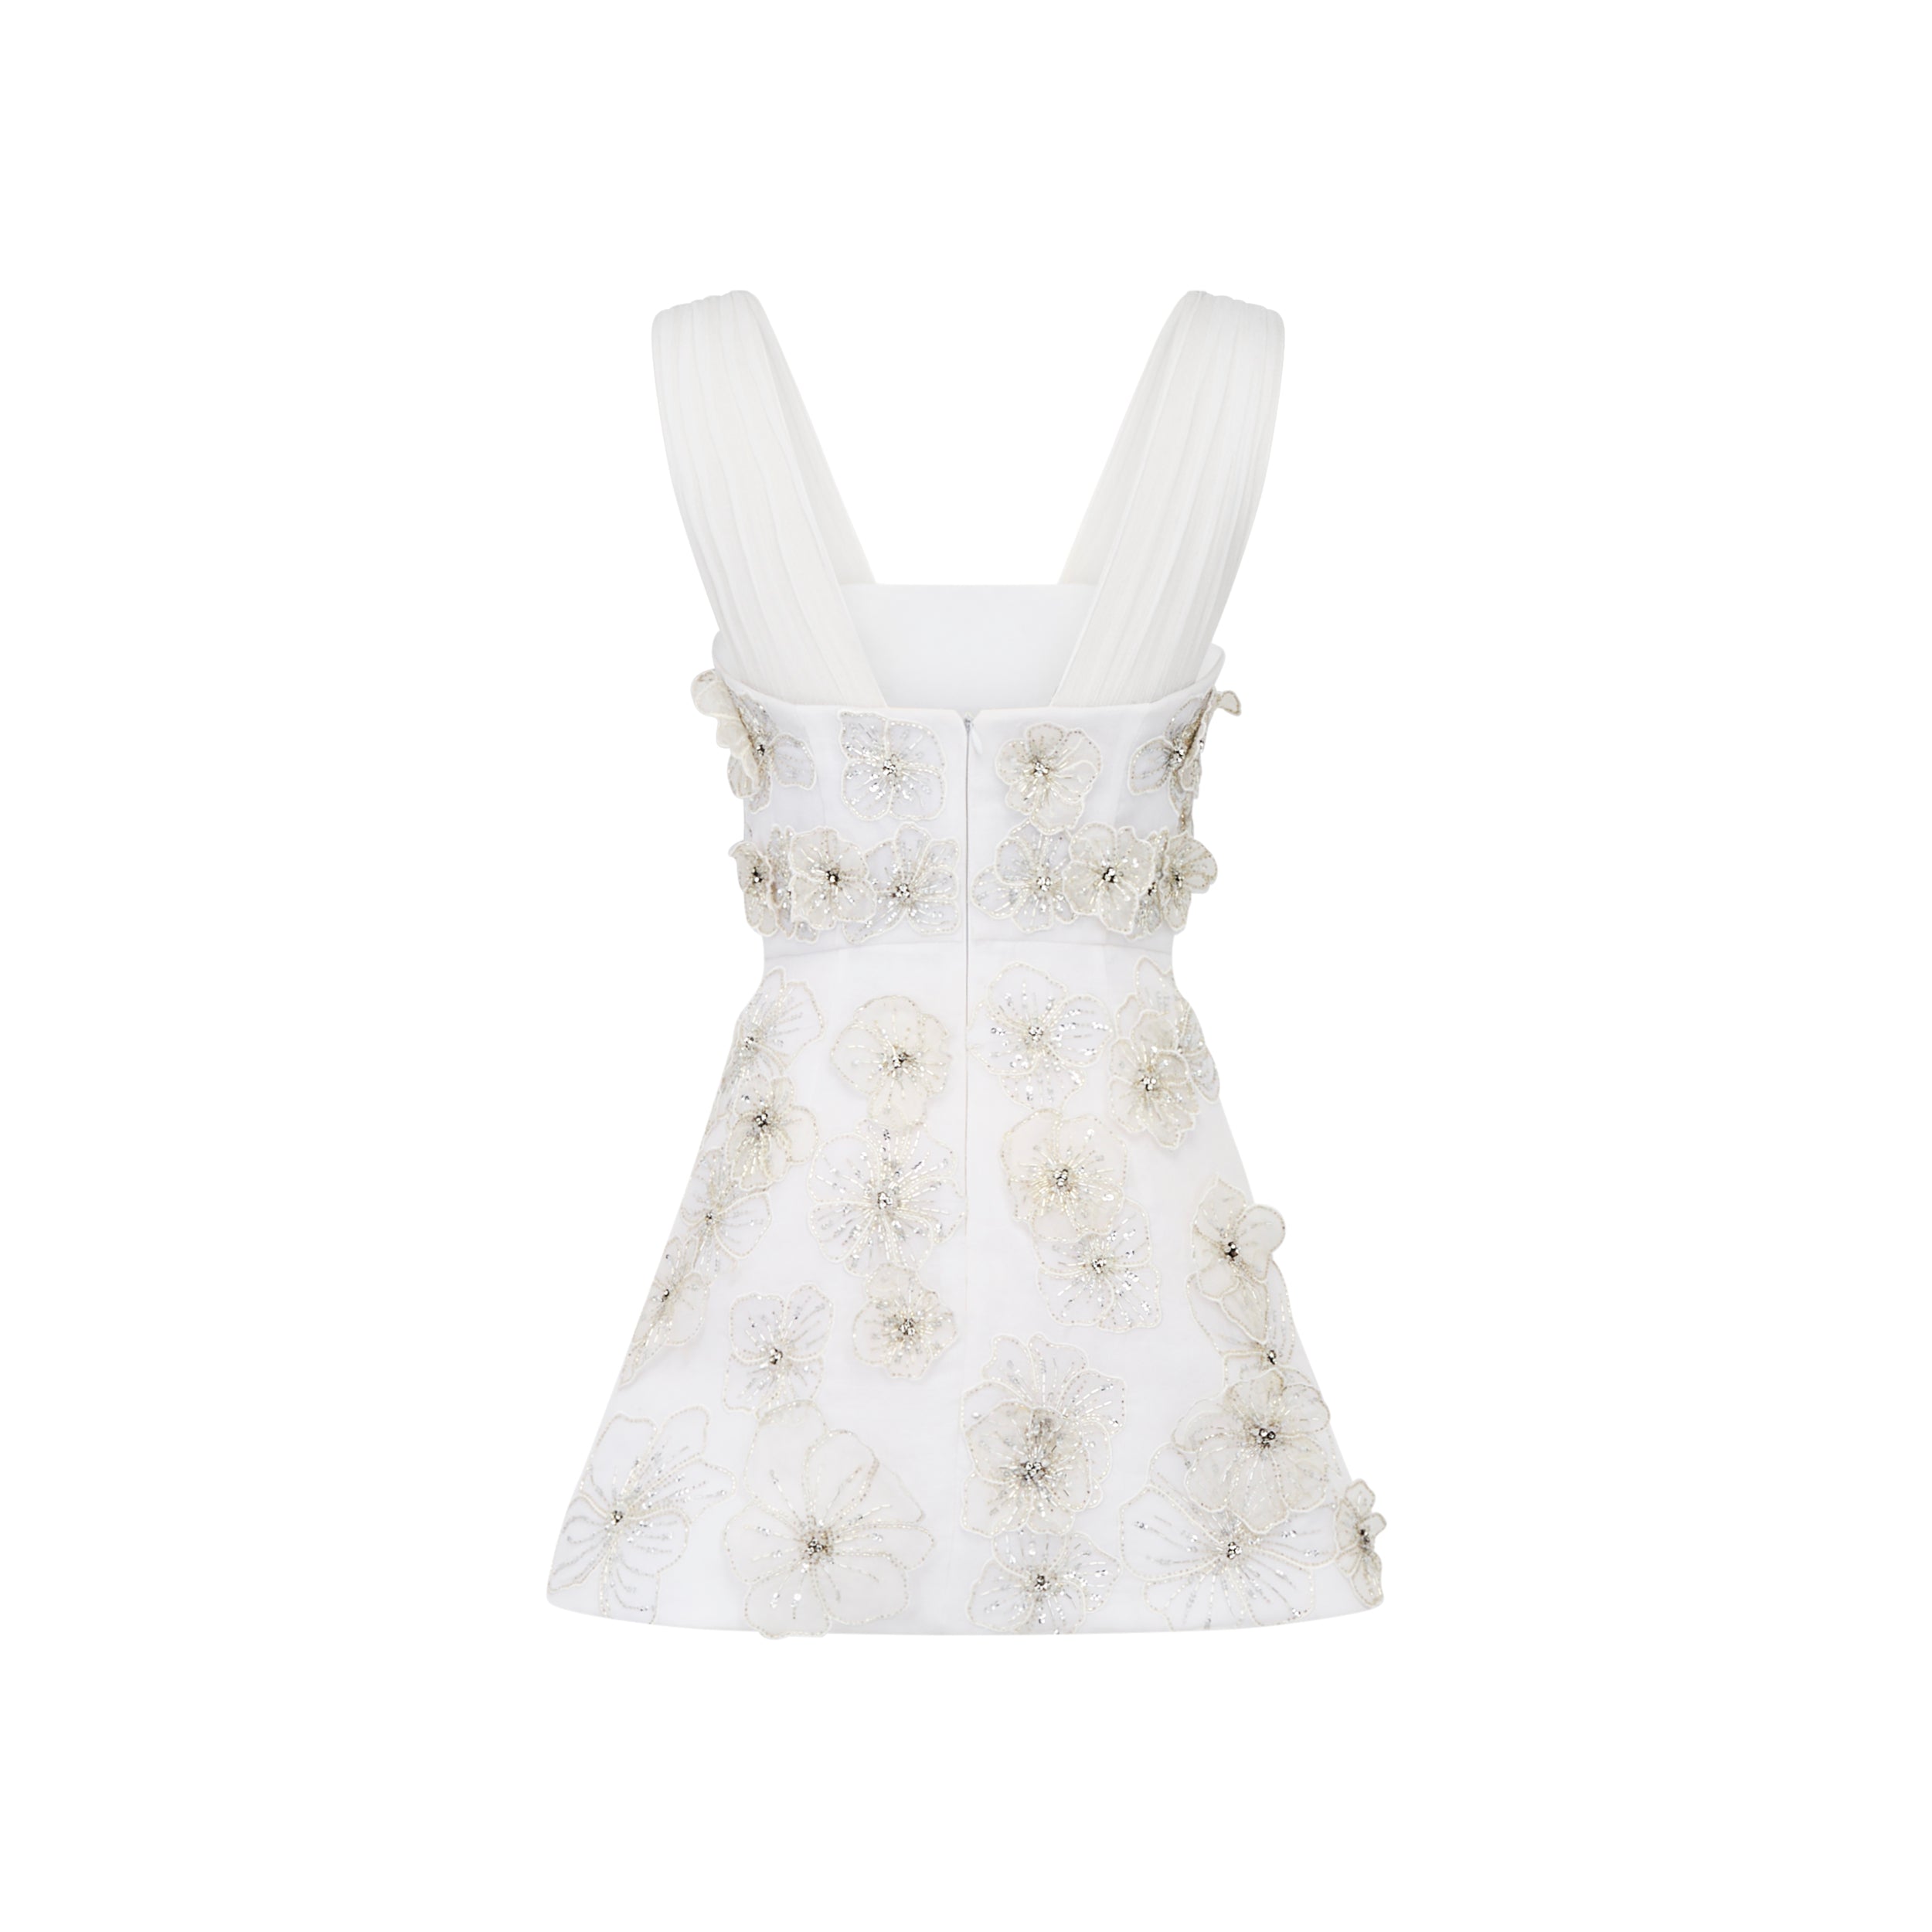 Ellia Dress in White Organza with 3D Appliqué